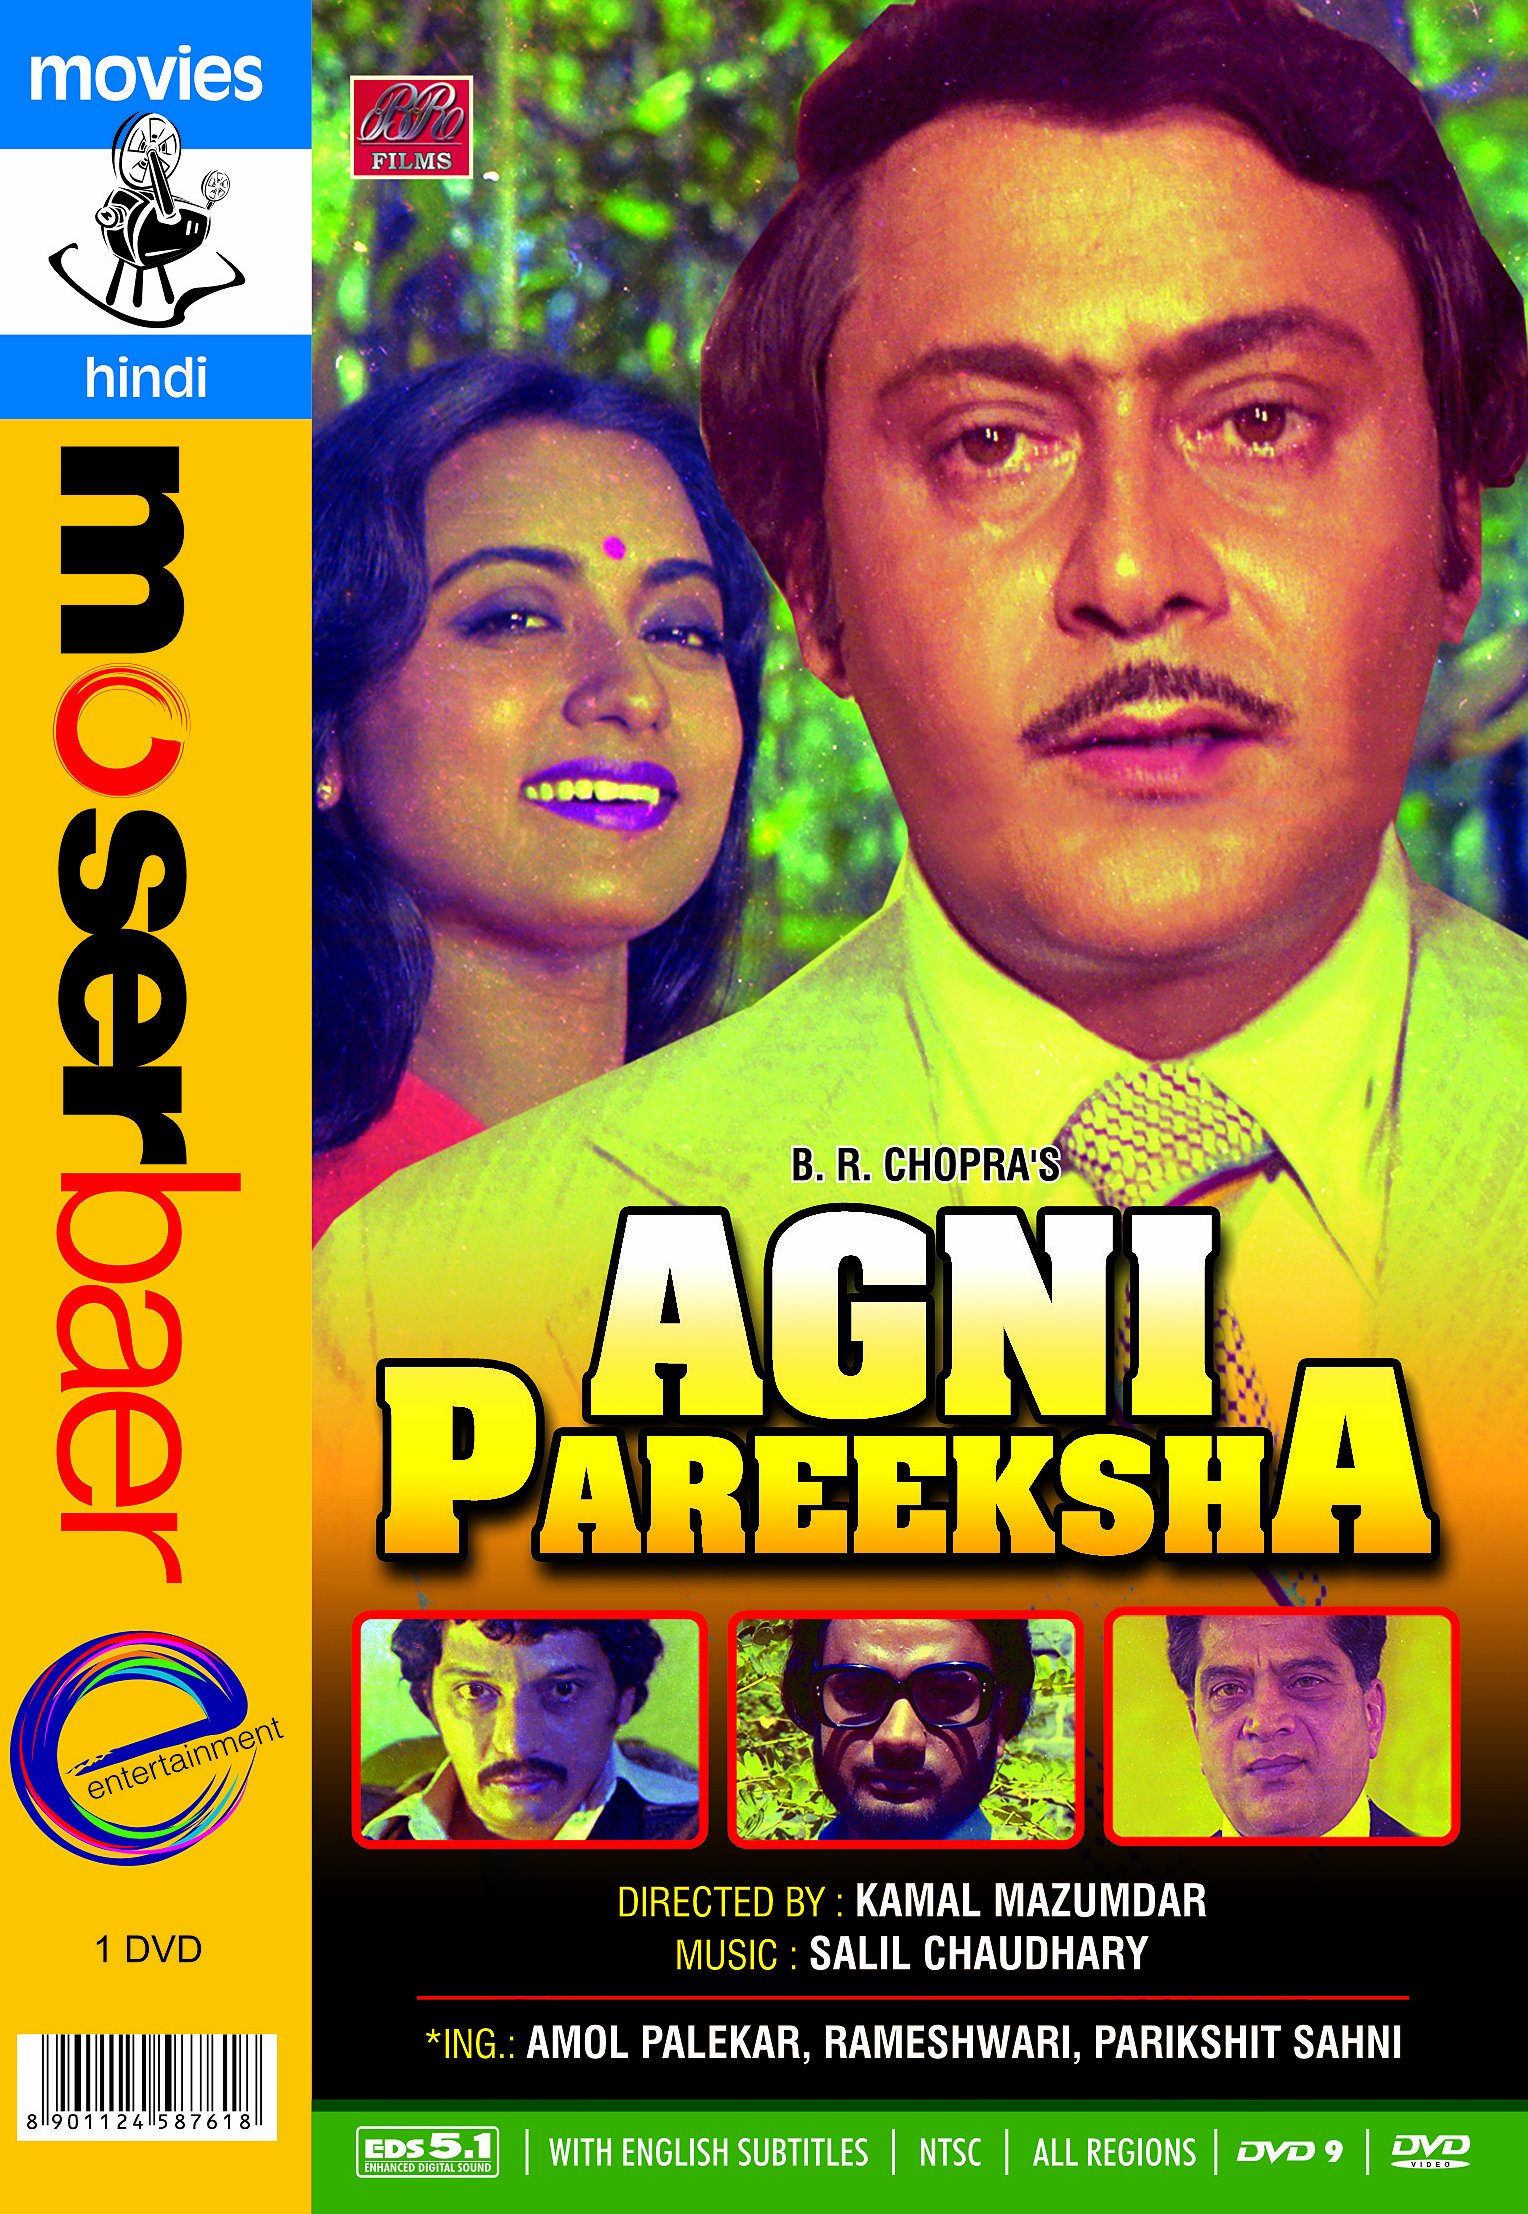 agni-pareeksha-movie-purchase-or-watch-online